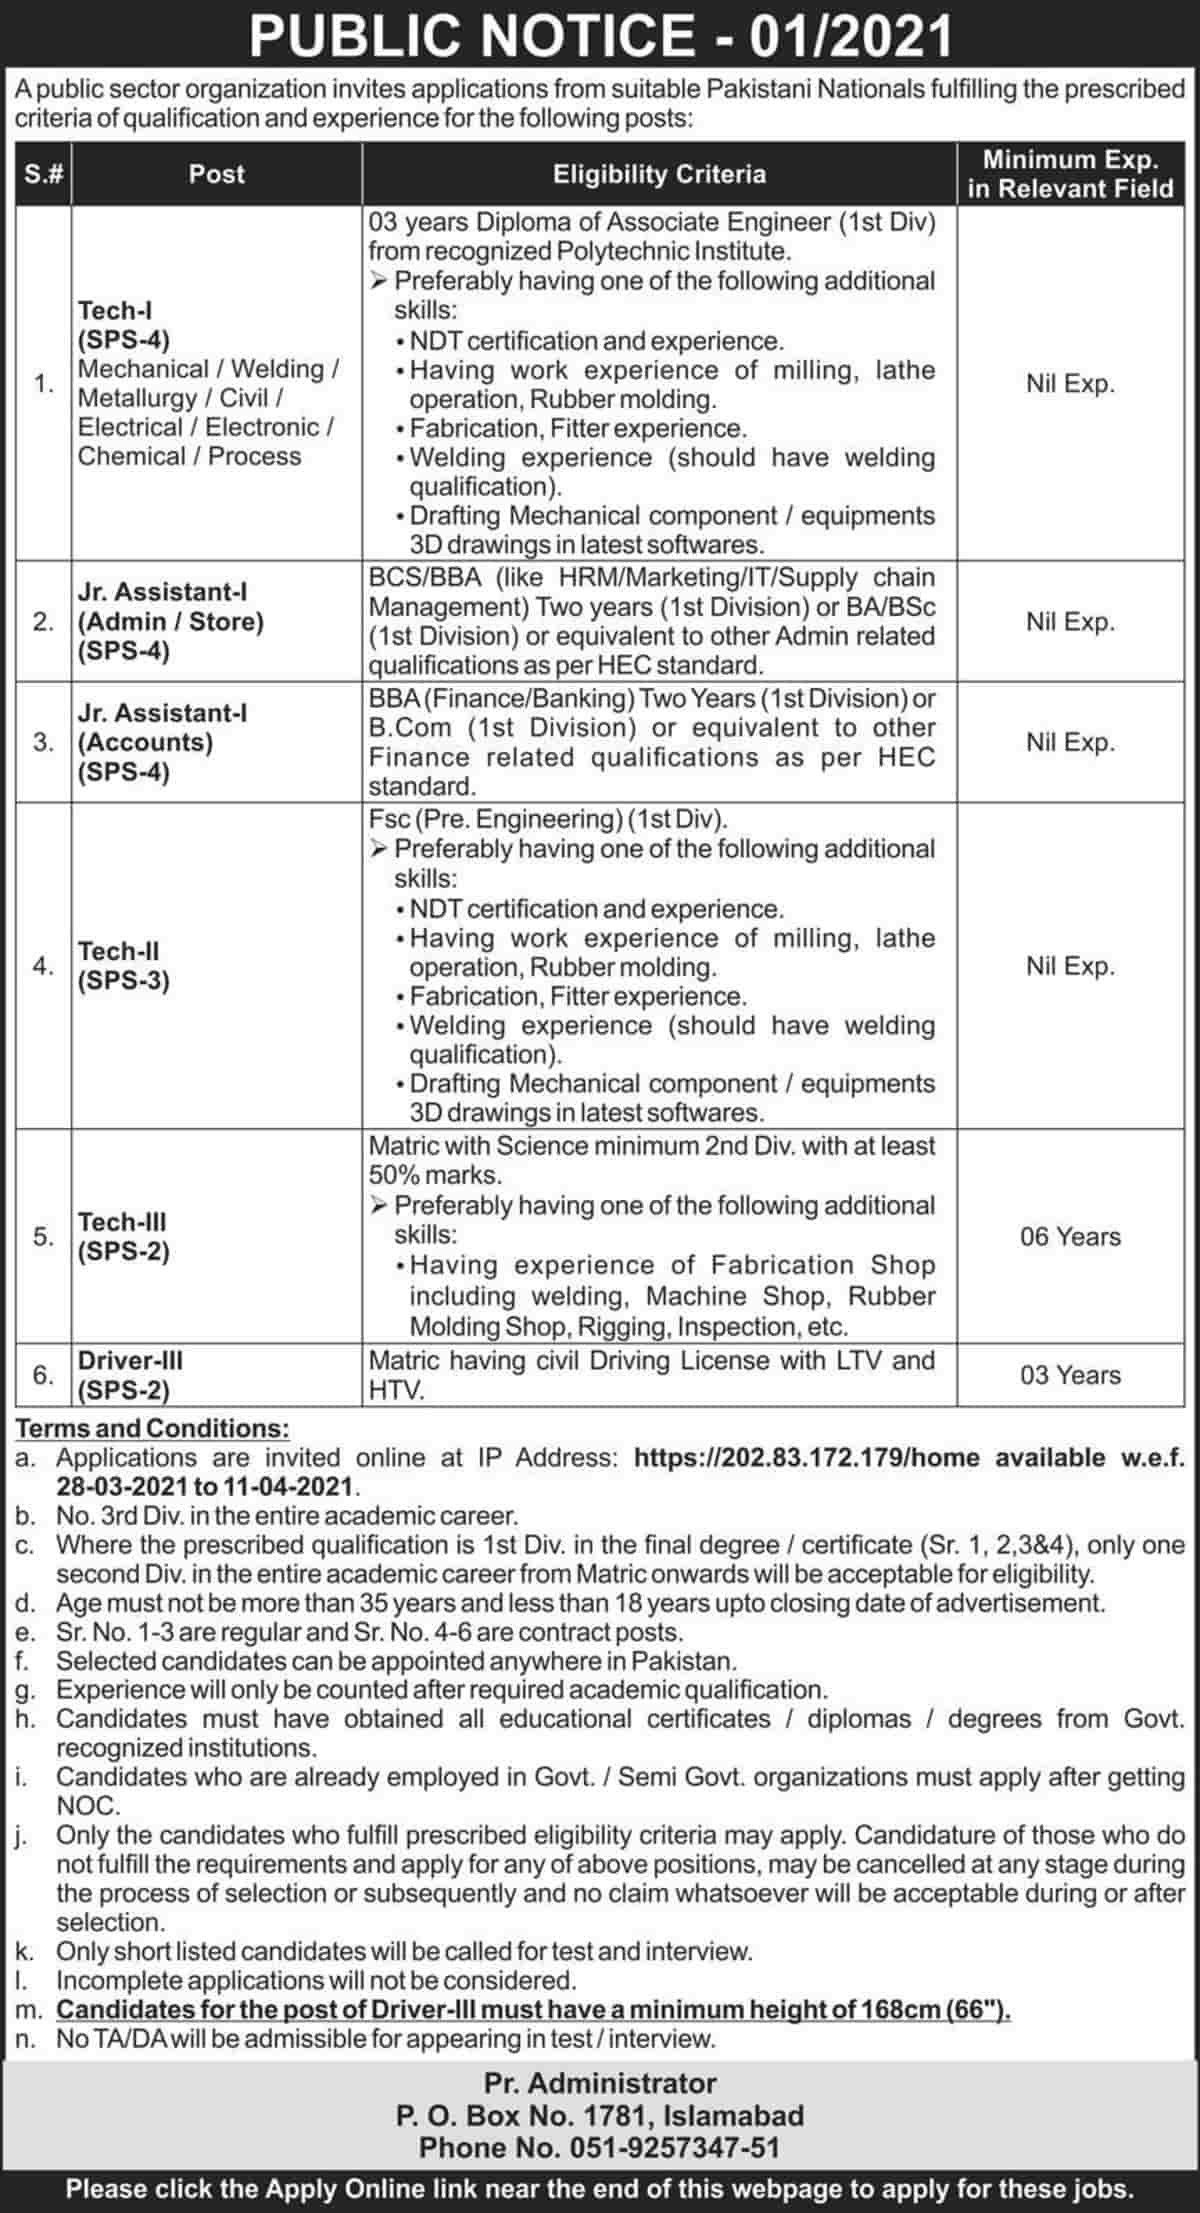 PO Box 1781 Islamabad PAEC Jobs 2021 Apply Online Public Notice 1